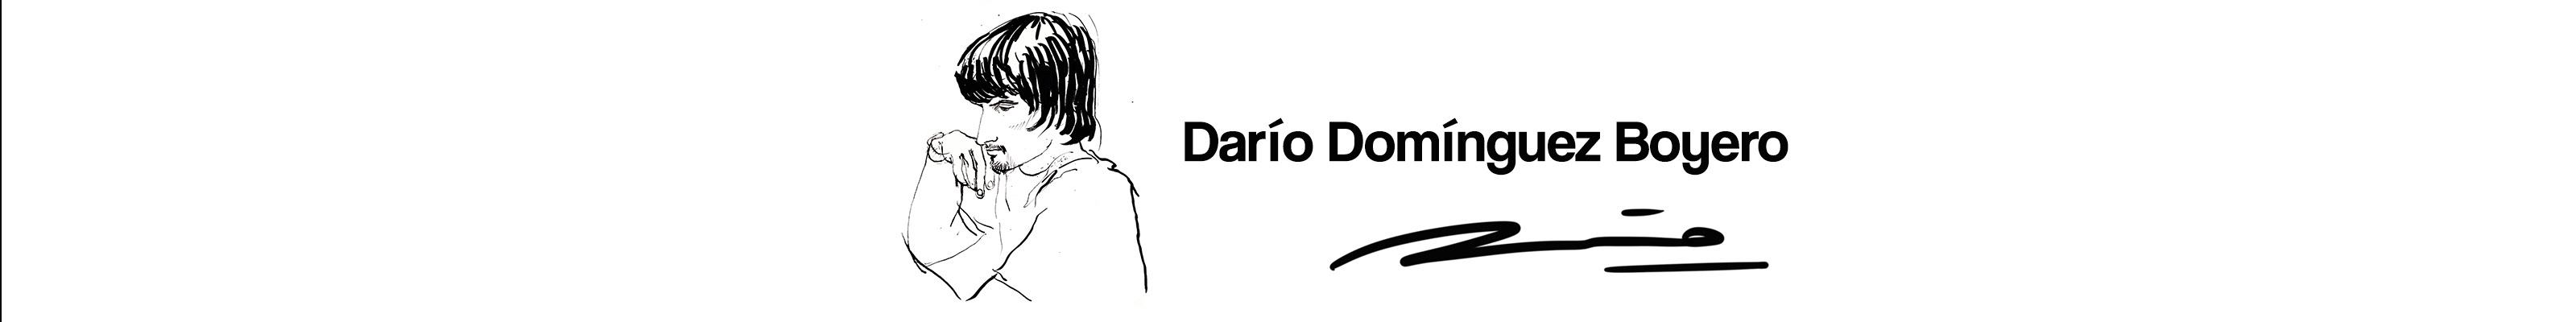 Dario Dominguez Boyero's profile banner